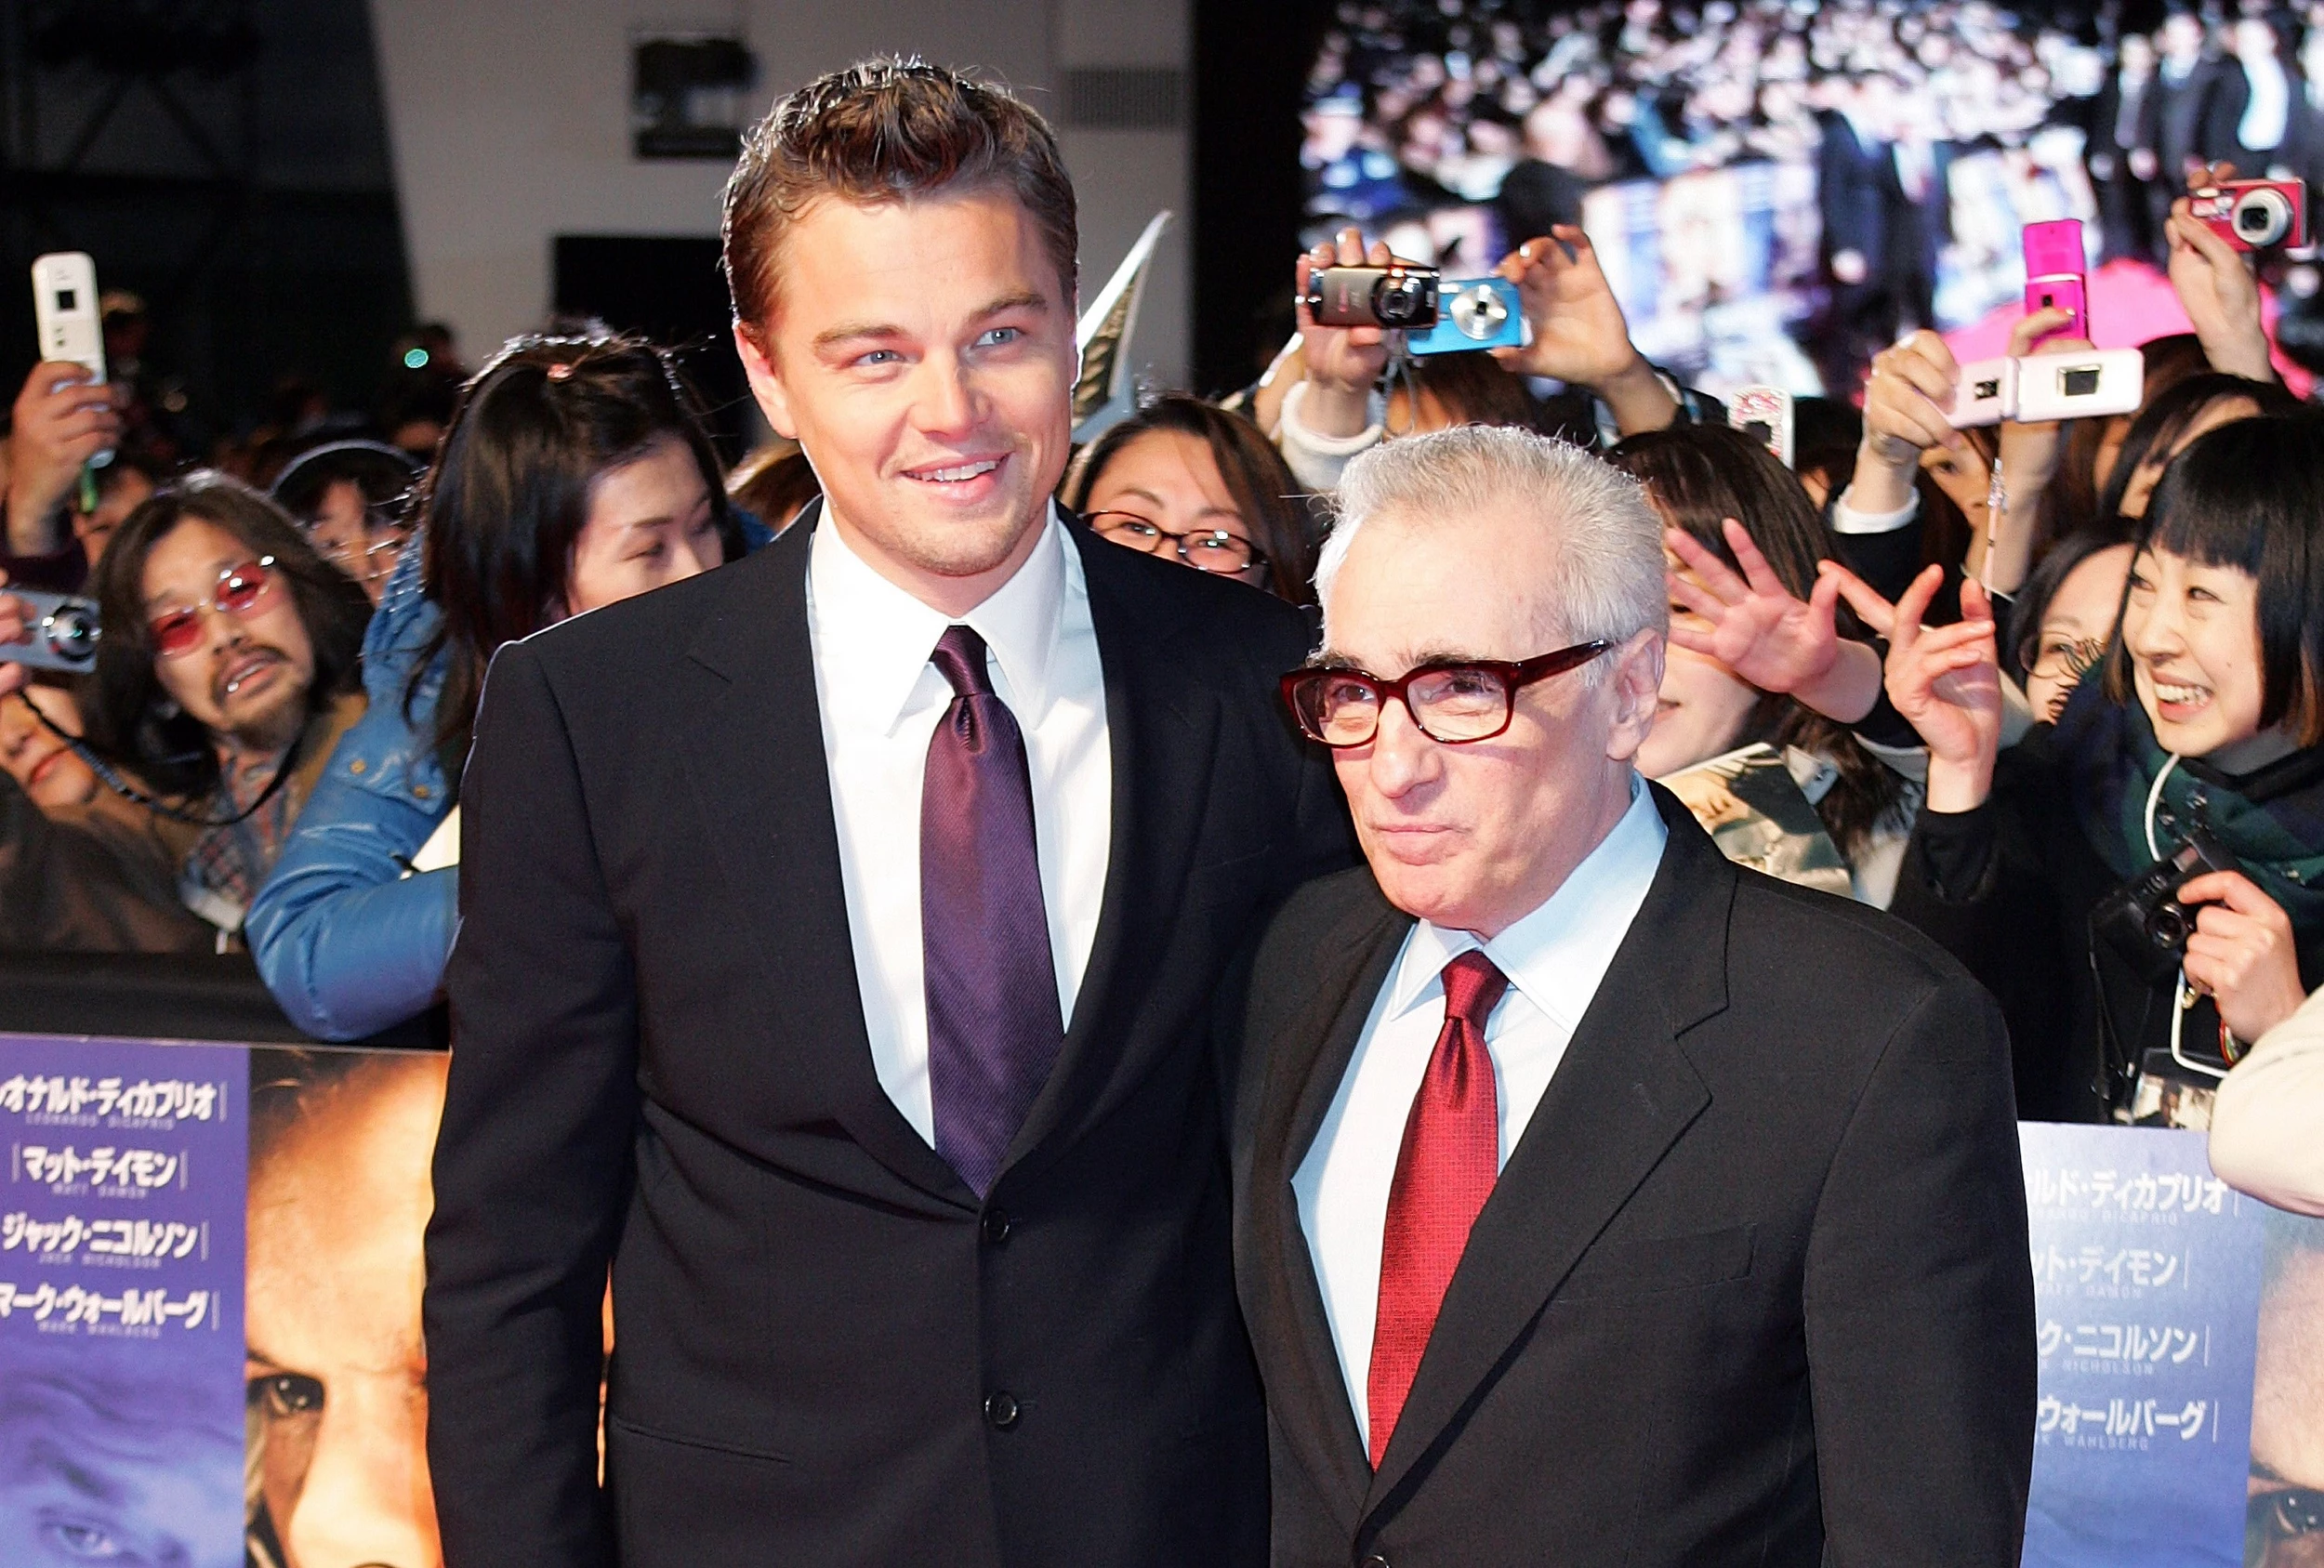 Leonardo DiCaprio Attends "The Departed" Japan Premiere